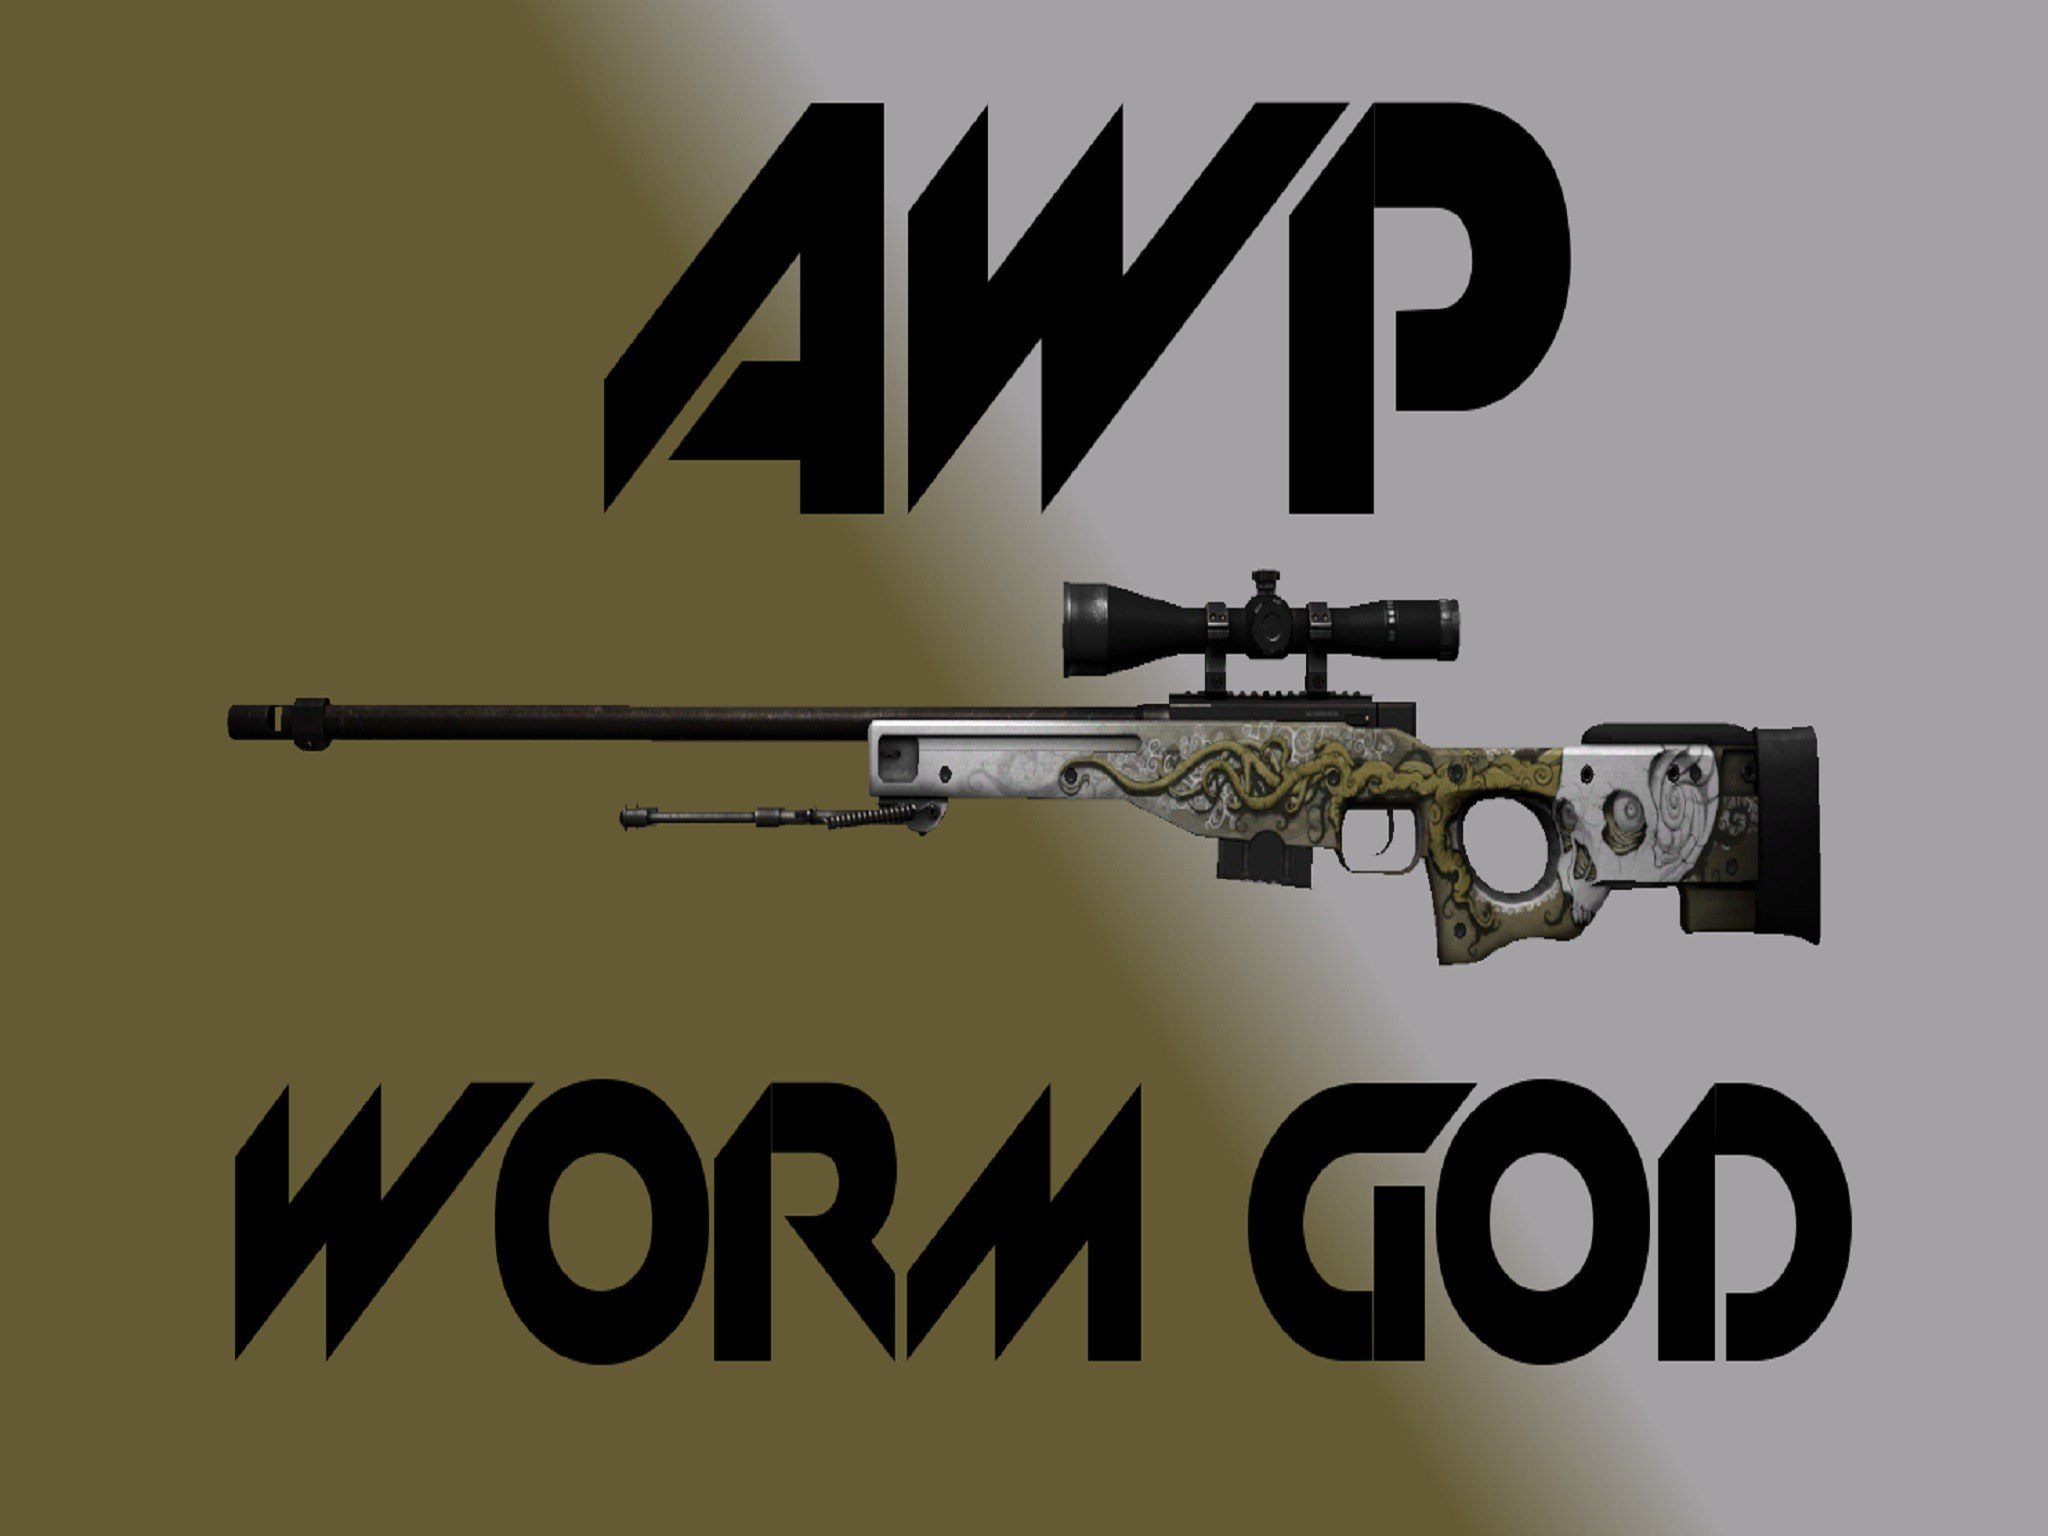 Awp worm god field test фото 27